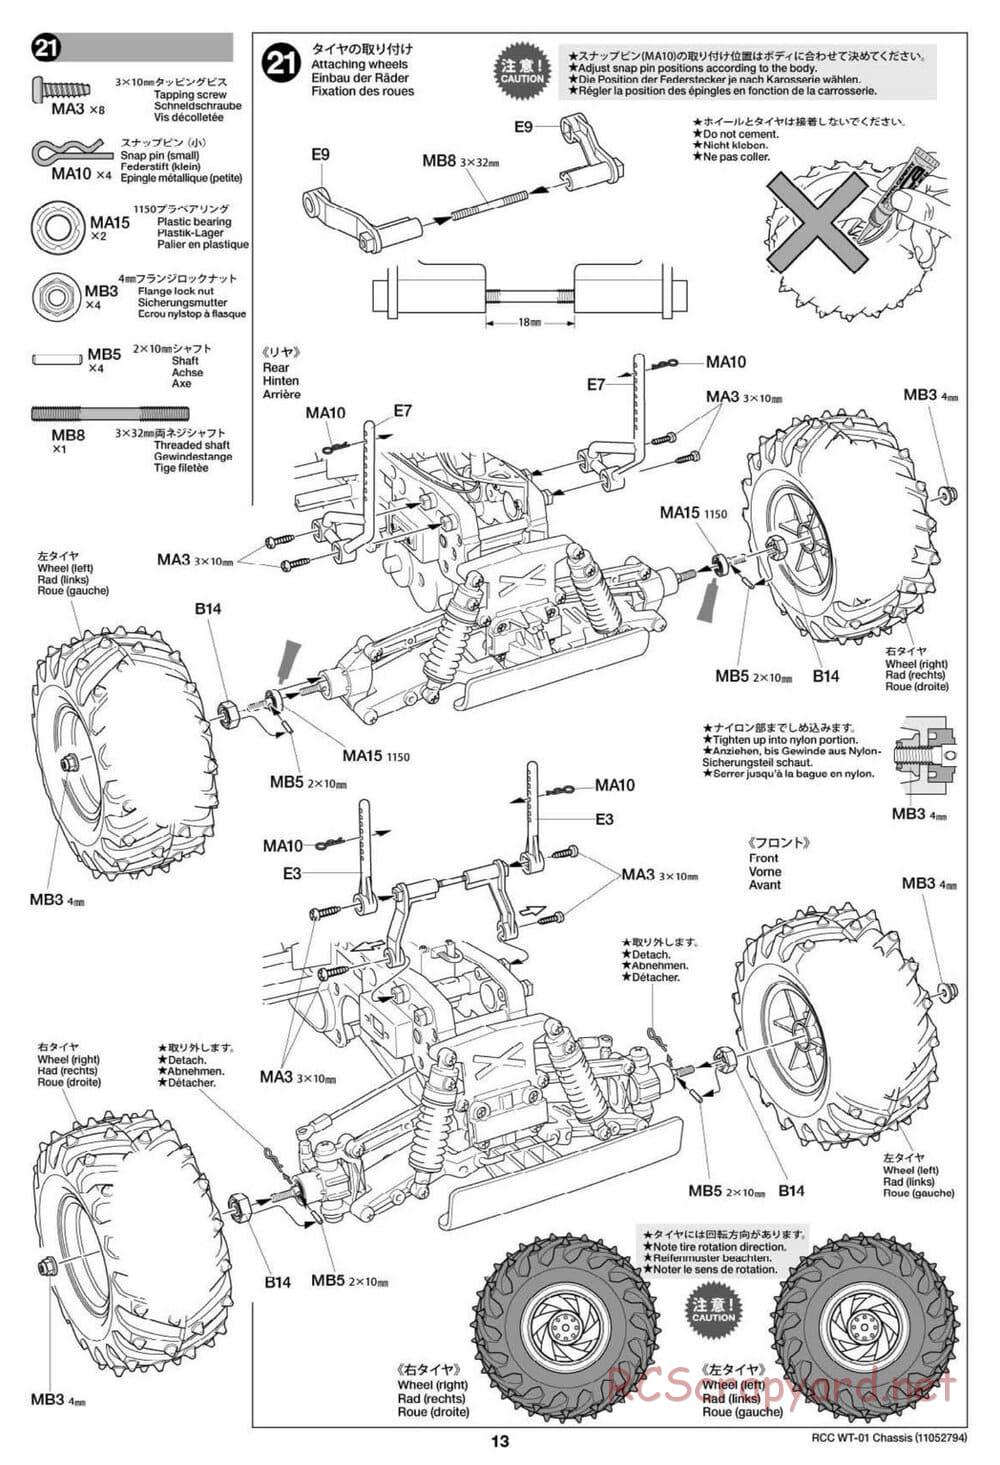 Tamiya - Mud Blaster II - WT-01 Chassis - Manual - Page 13